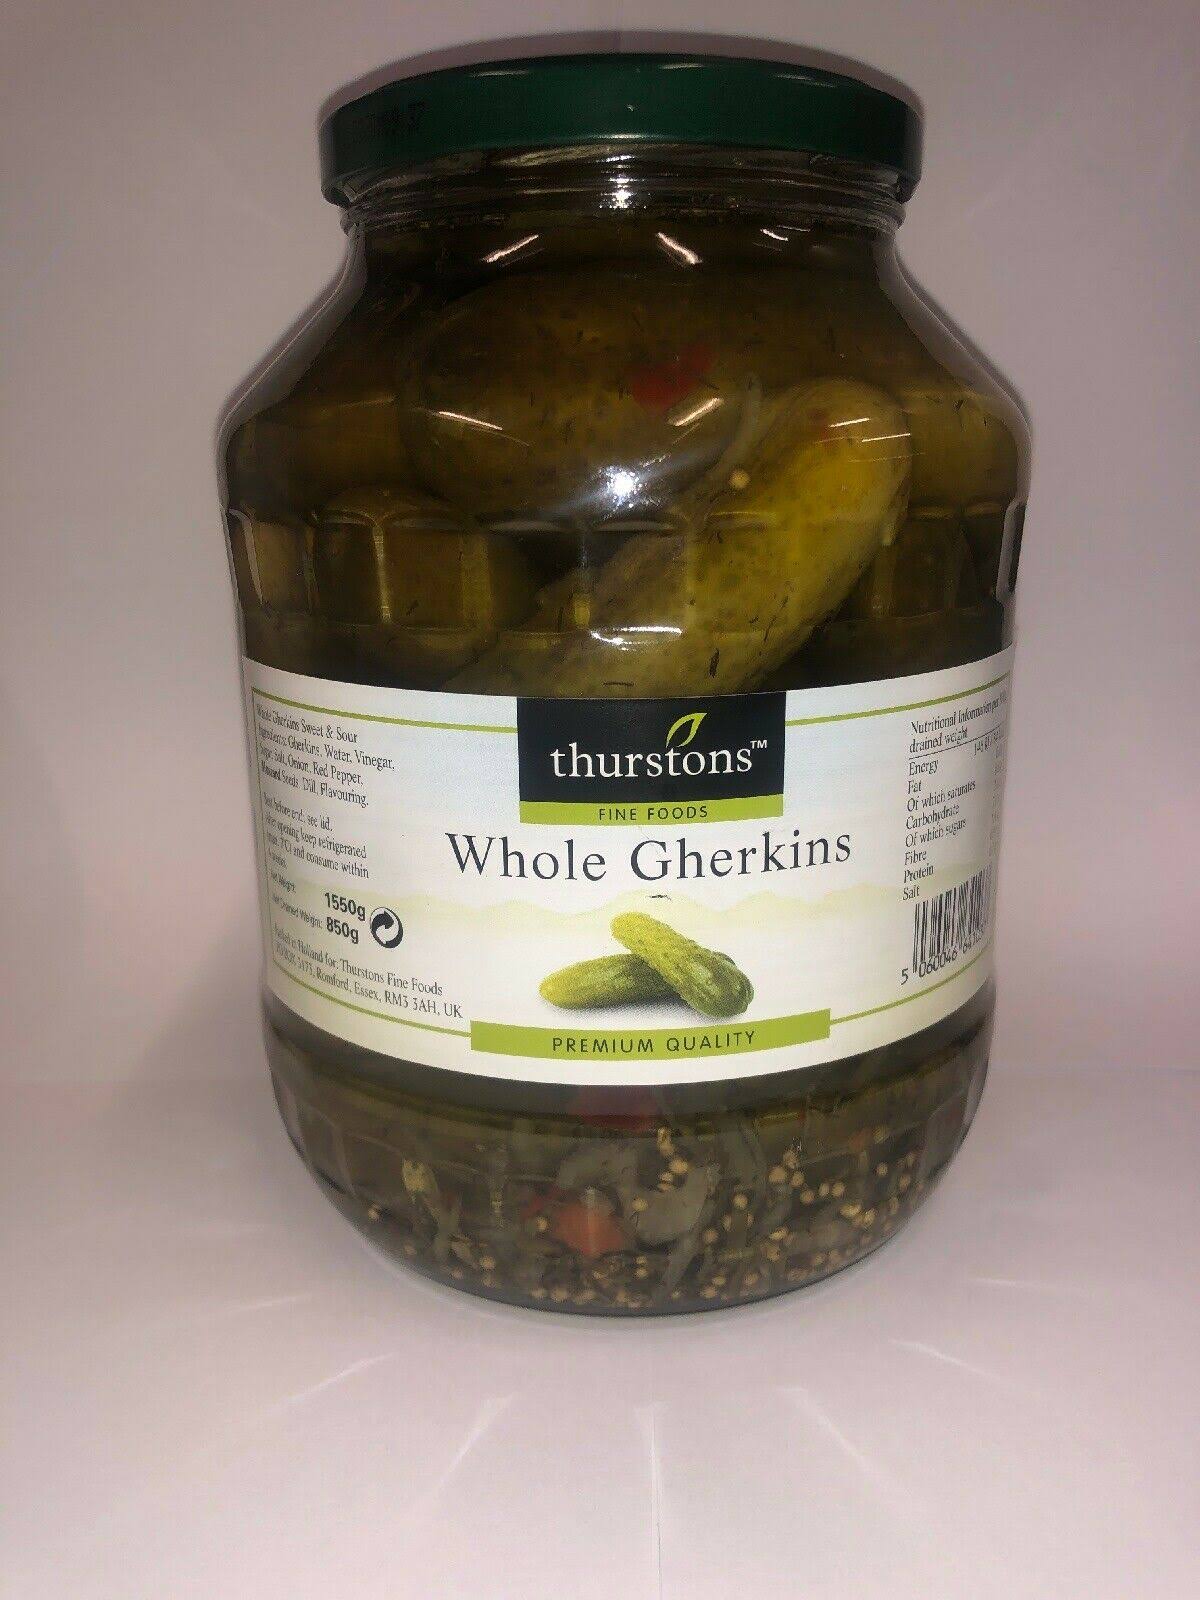 Thurstons Premium Quality Whole Gherkins in Vinegar 1550G